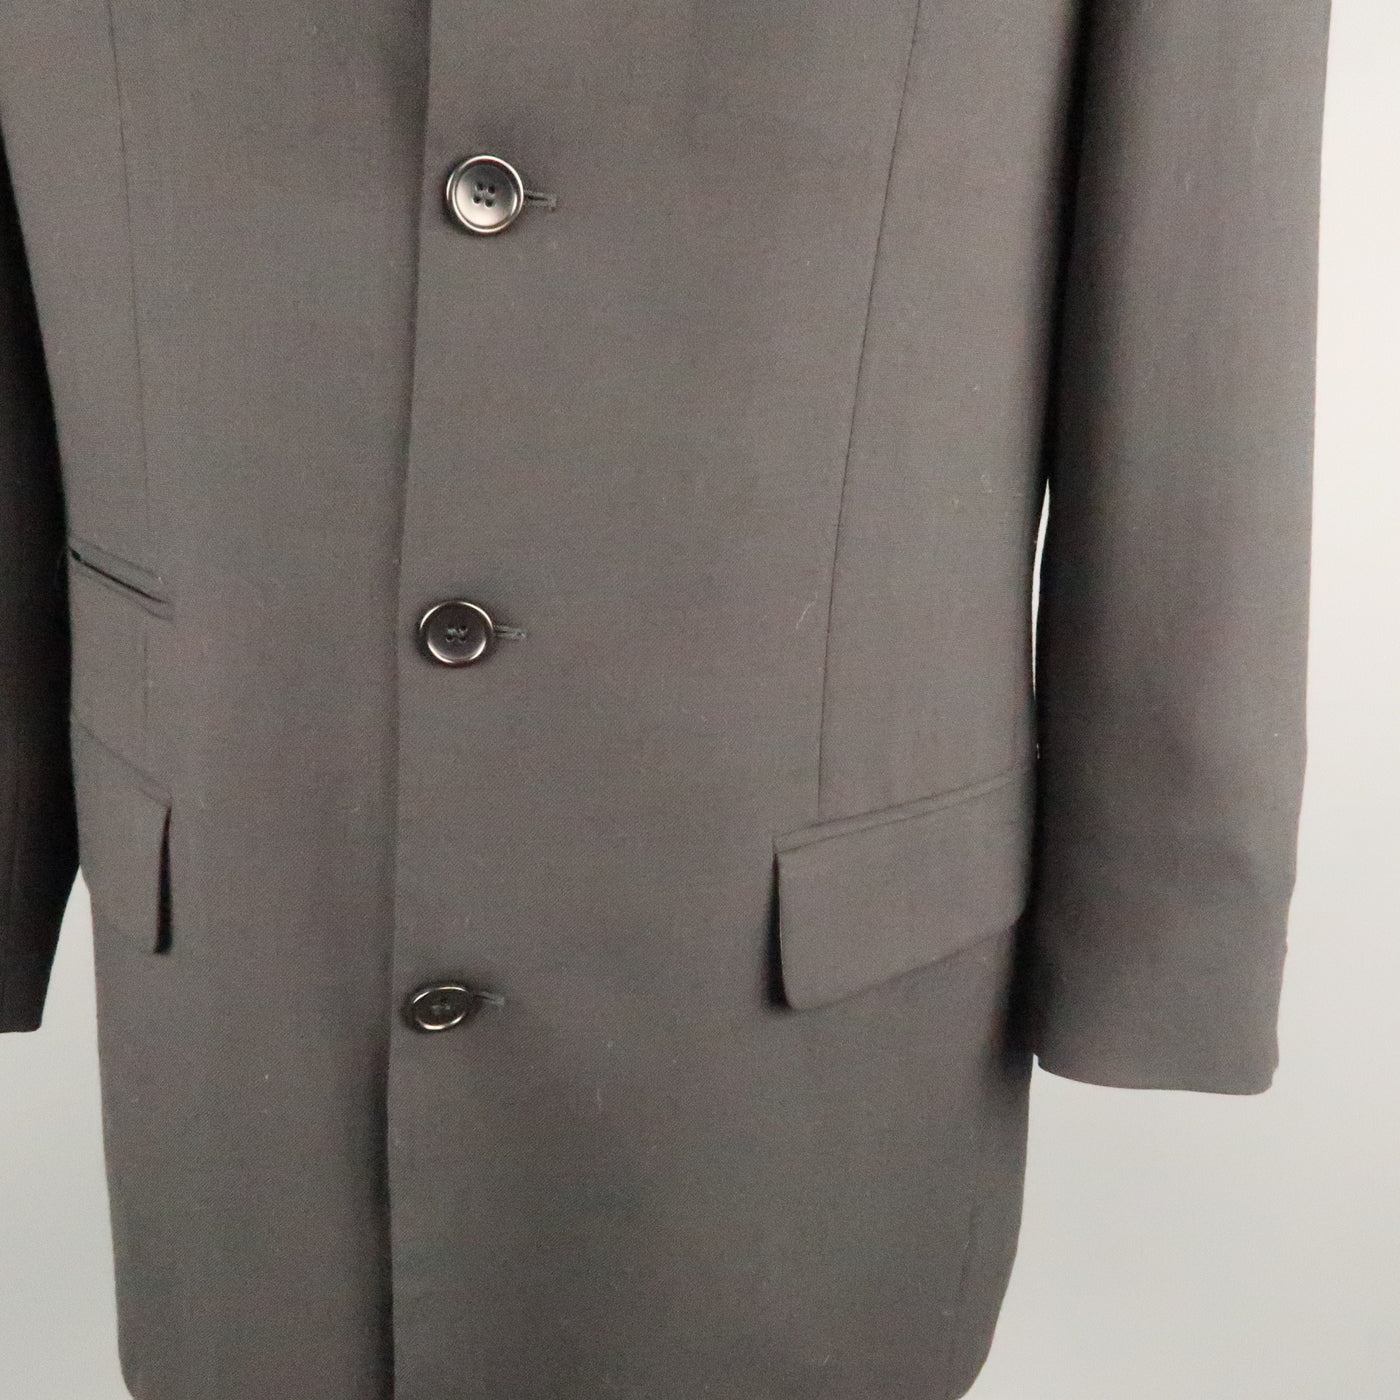 MONDO DI MARCO Chest Size 42 Long Black Solid Wool Nehru Collar Sport Coat